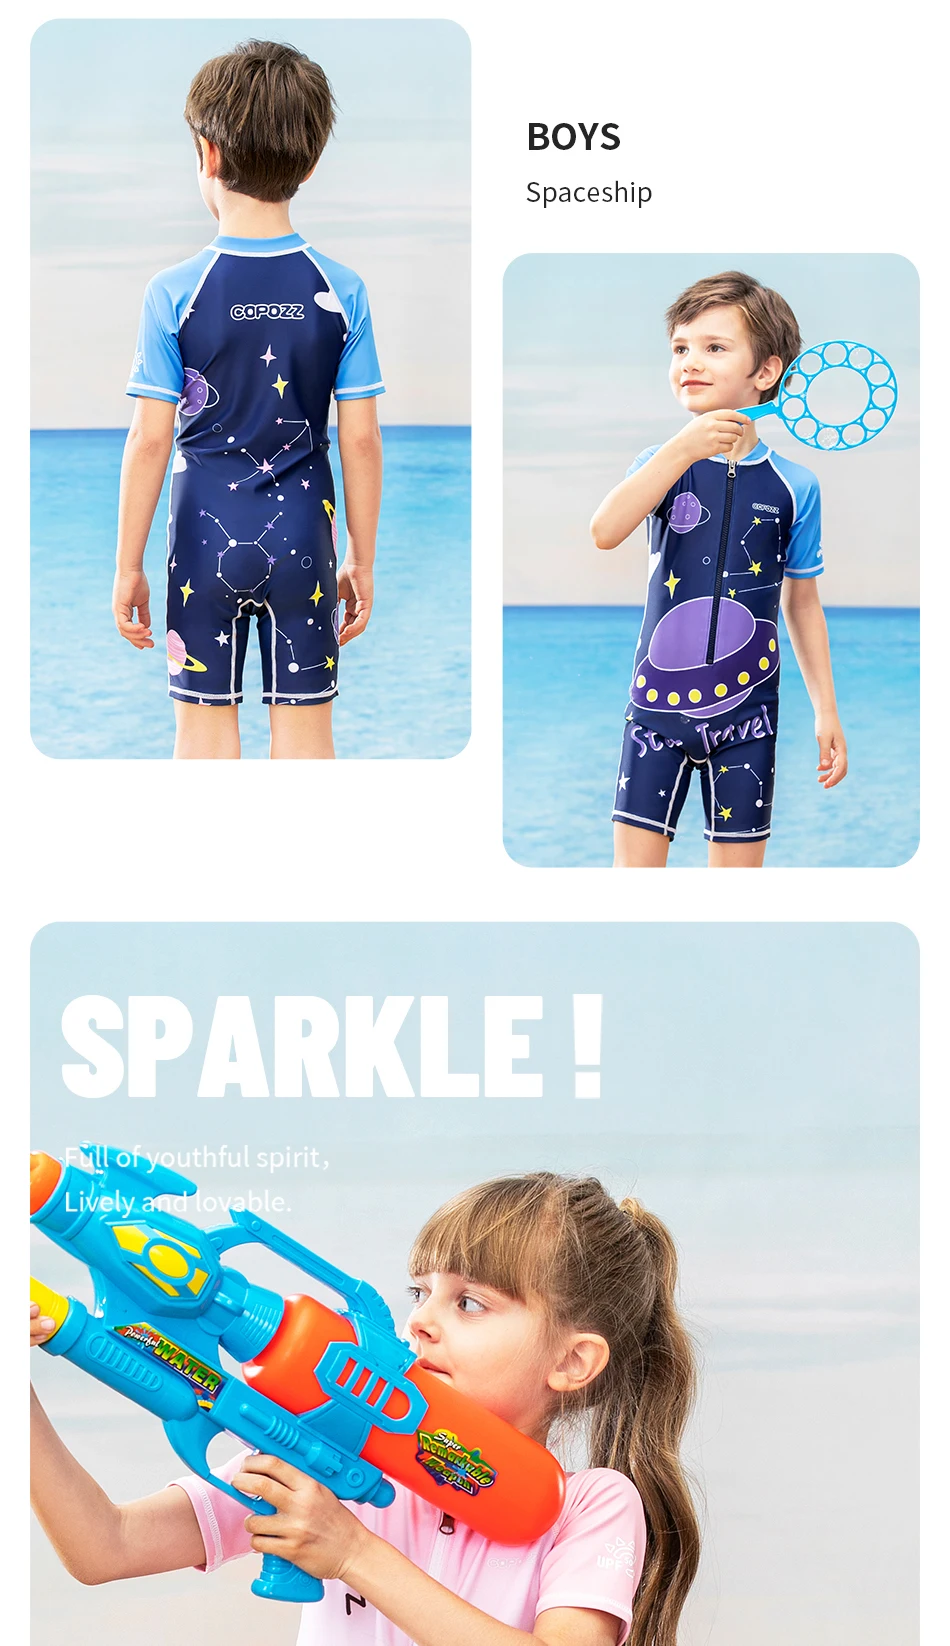 COPOZZ Children's One-piece Swimsuit Swimwear Cartoon Sports Swimsuit Surfing Suits Beach Wear For Boys Girls UV Protection 50+